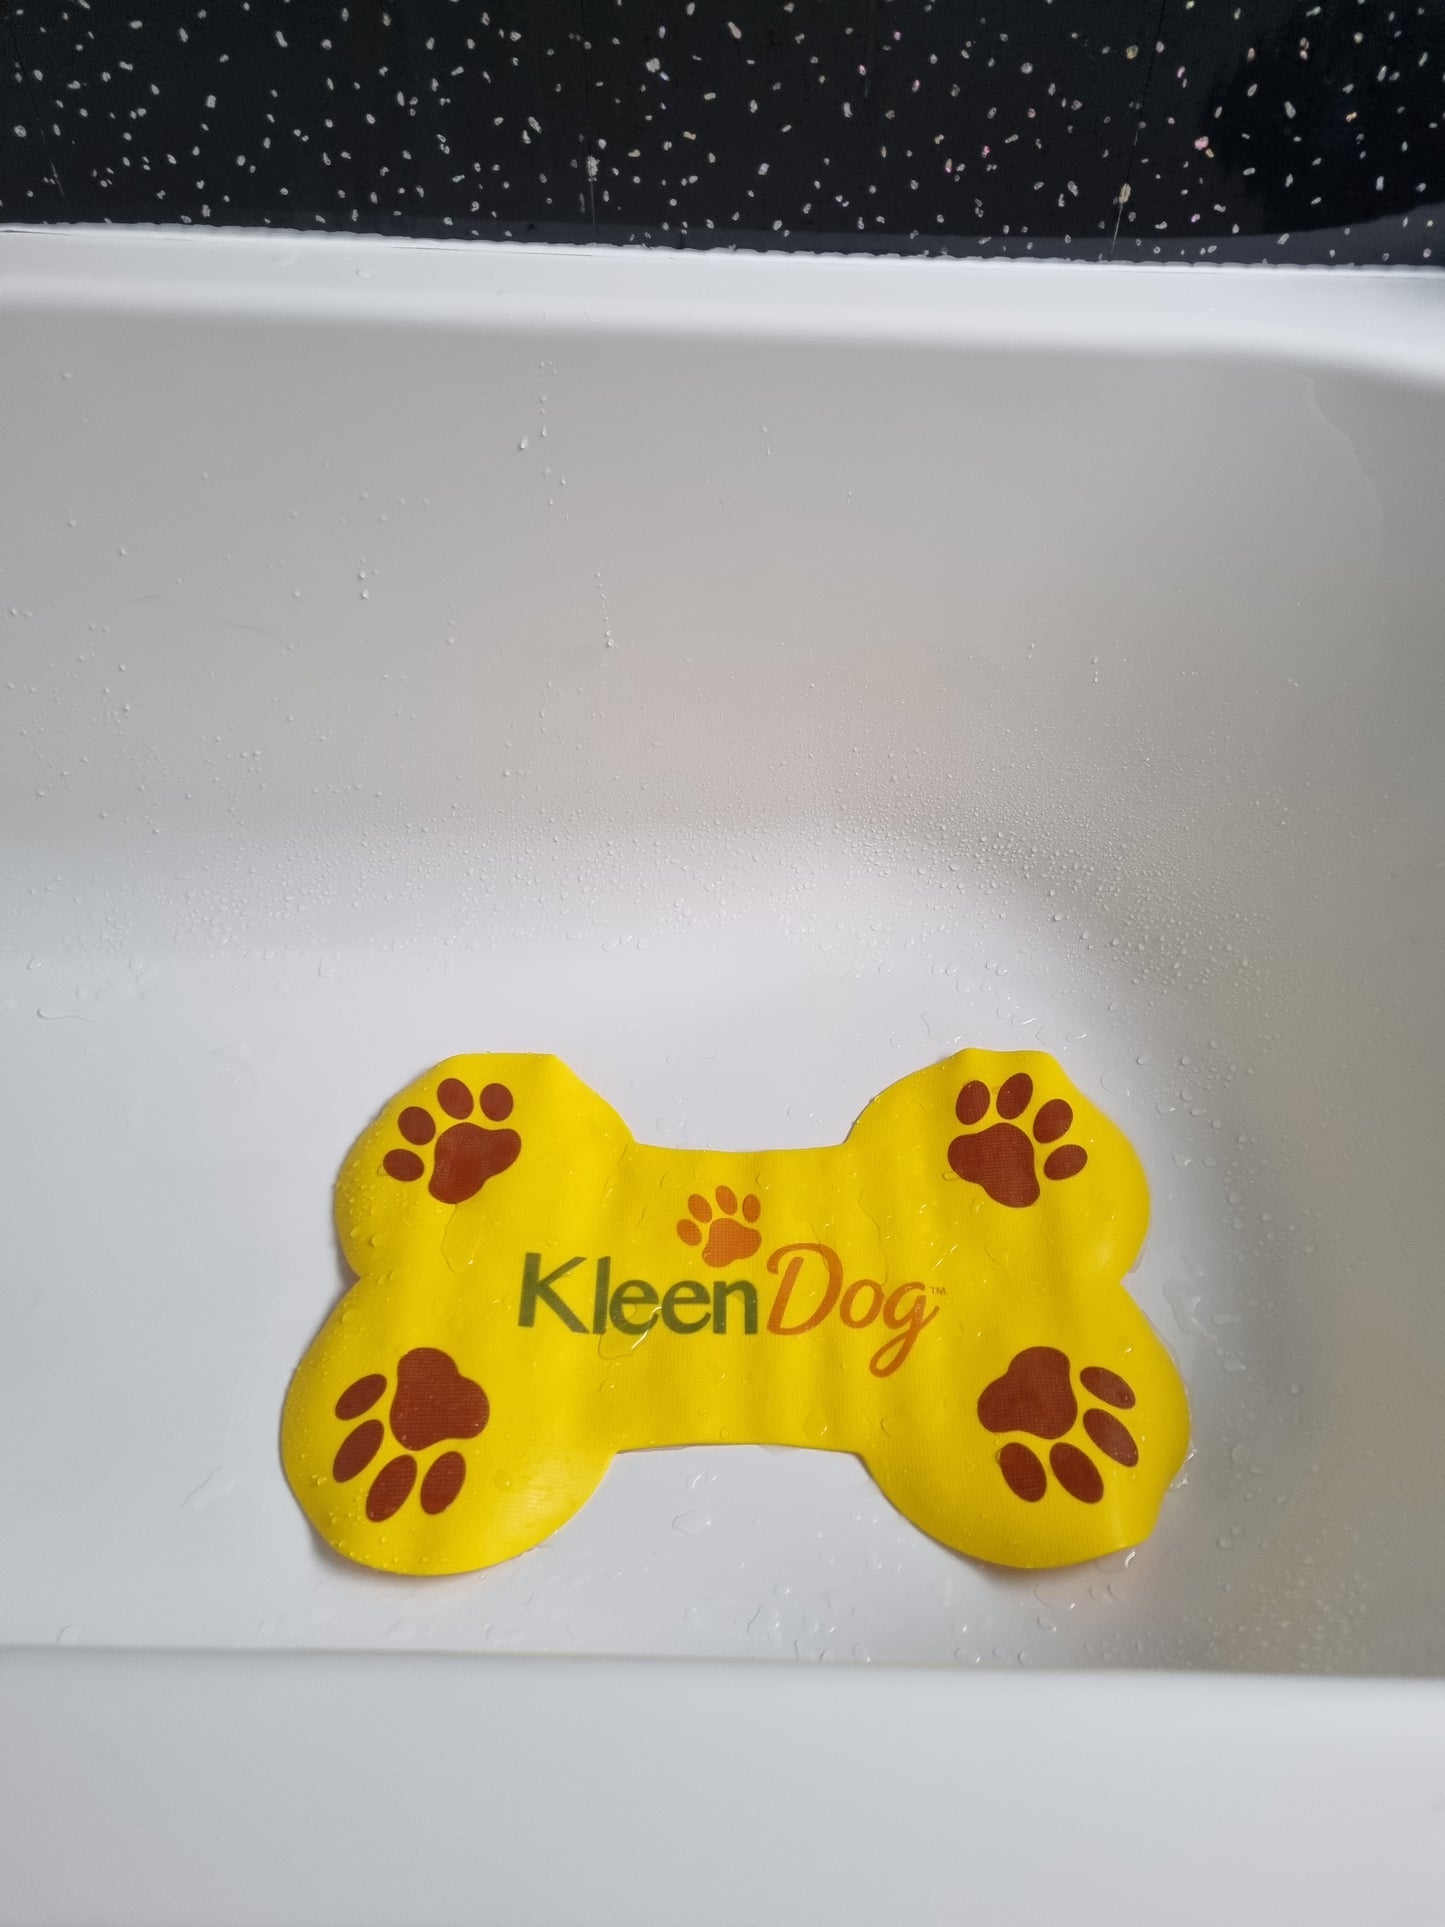 Kleen Dog Bath System